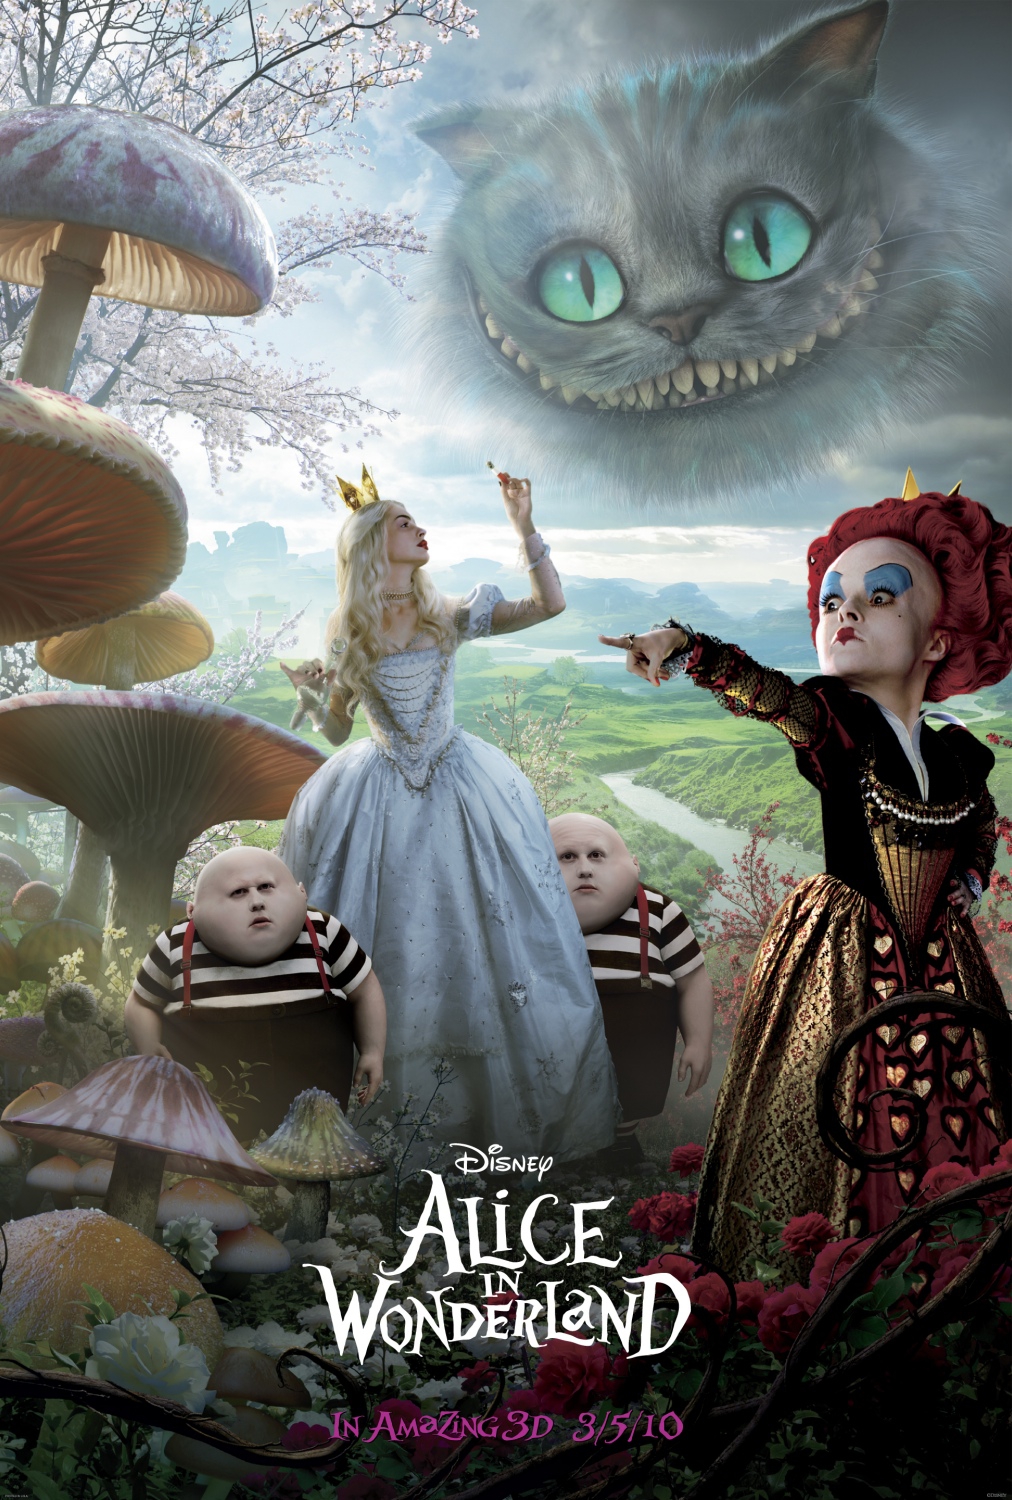  Alice no País das Maravilhas (2010) Poster 